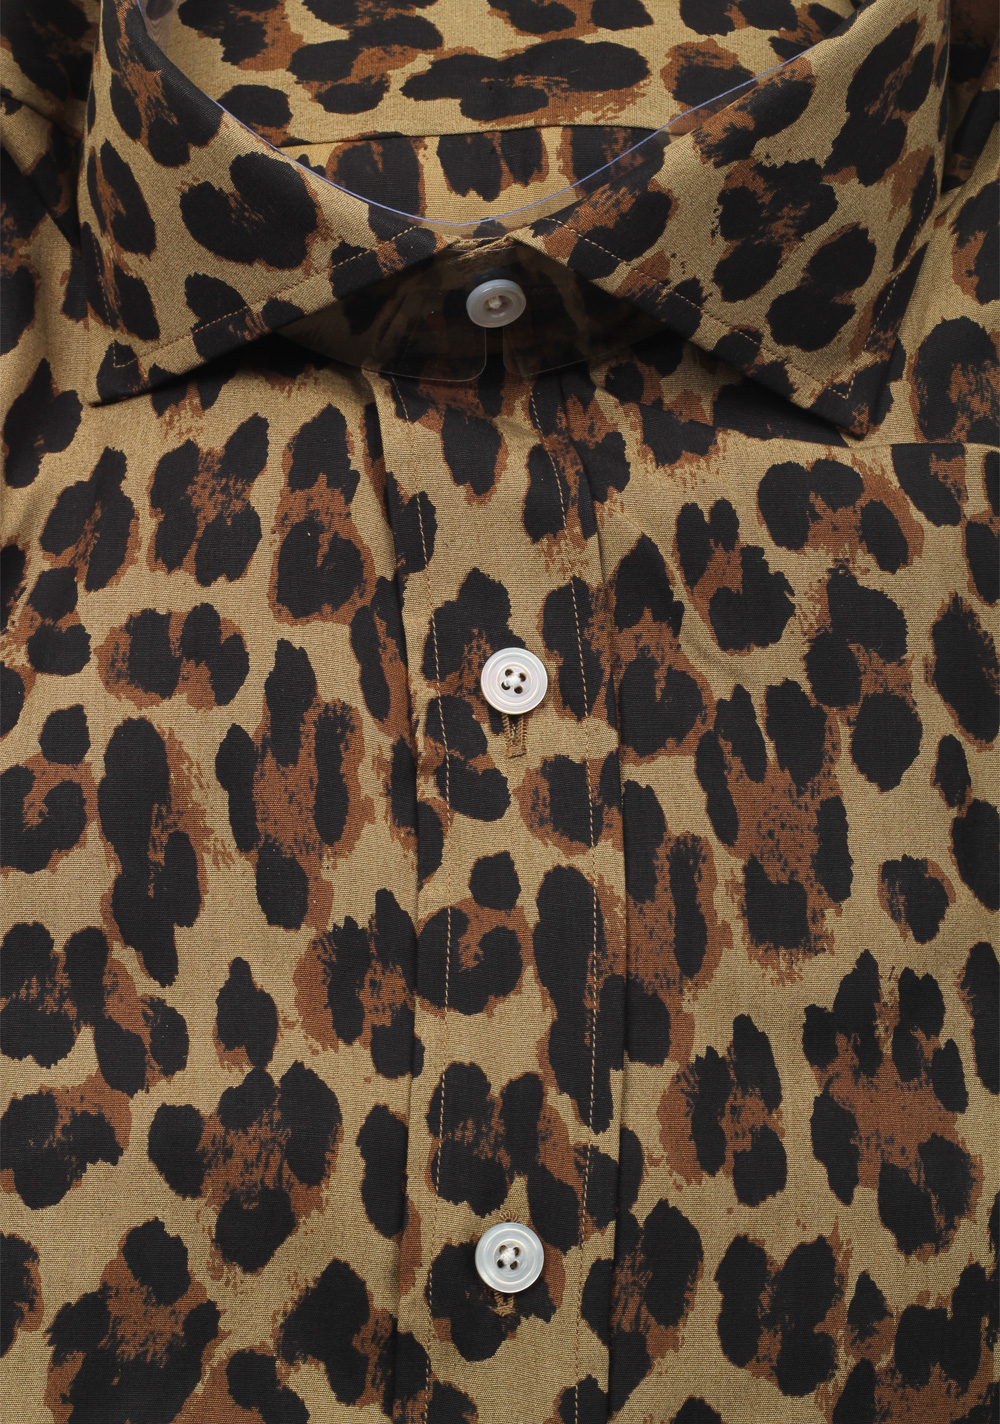 TOM FORD Brown Leopard Shirt Size 40 / 15,75 U.S. | Costume Limité